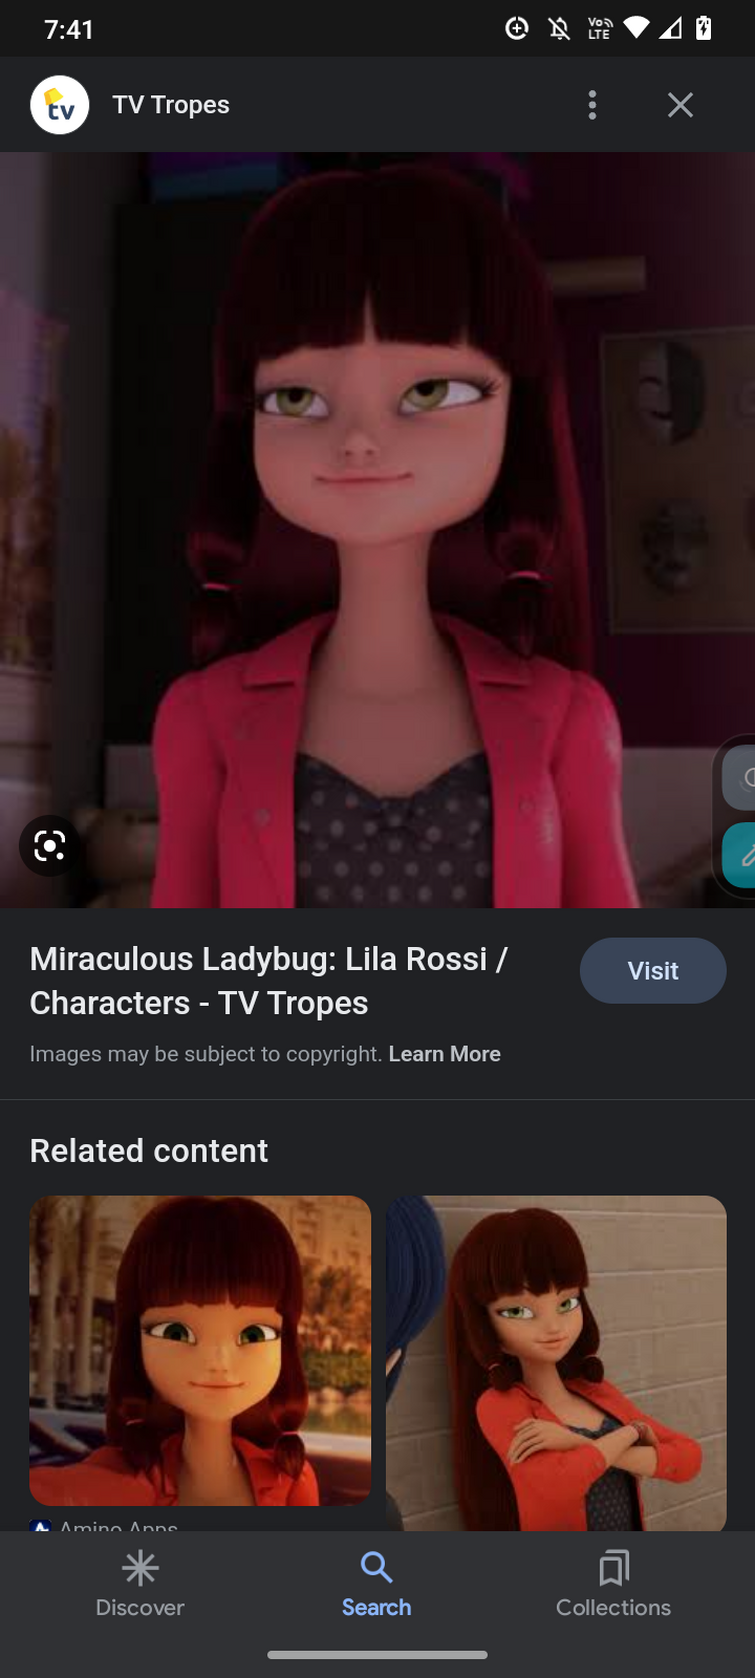 Miraculous Ladybug / Characters - TV Tropes